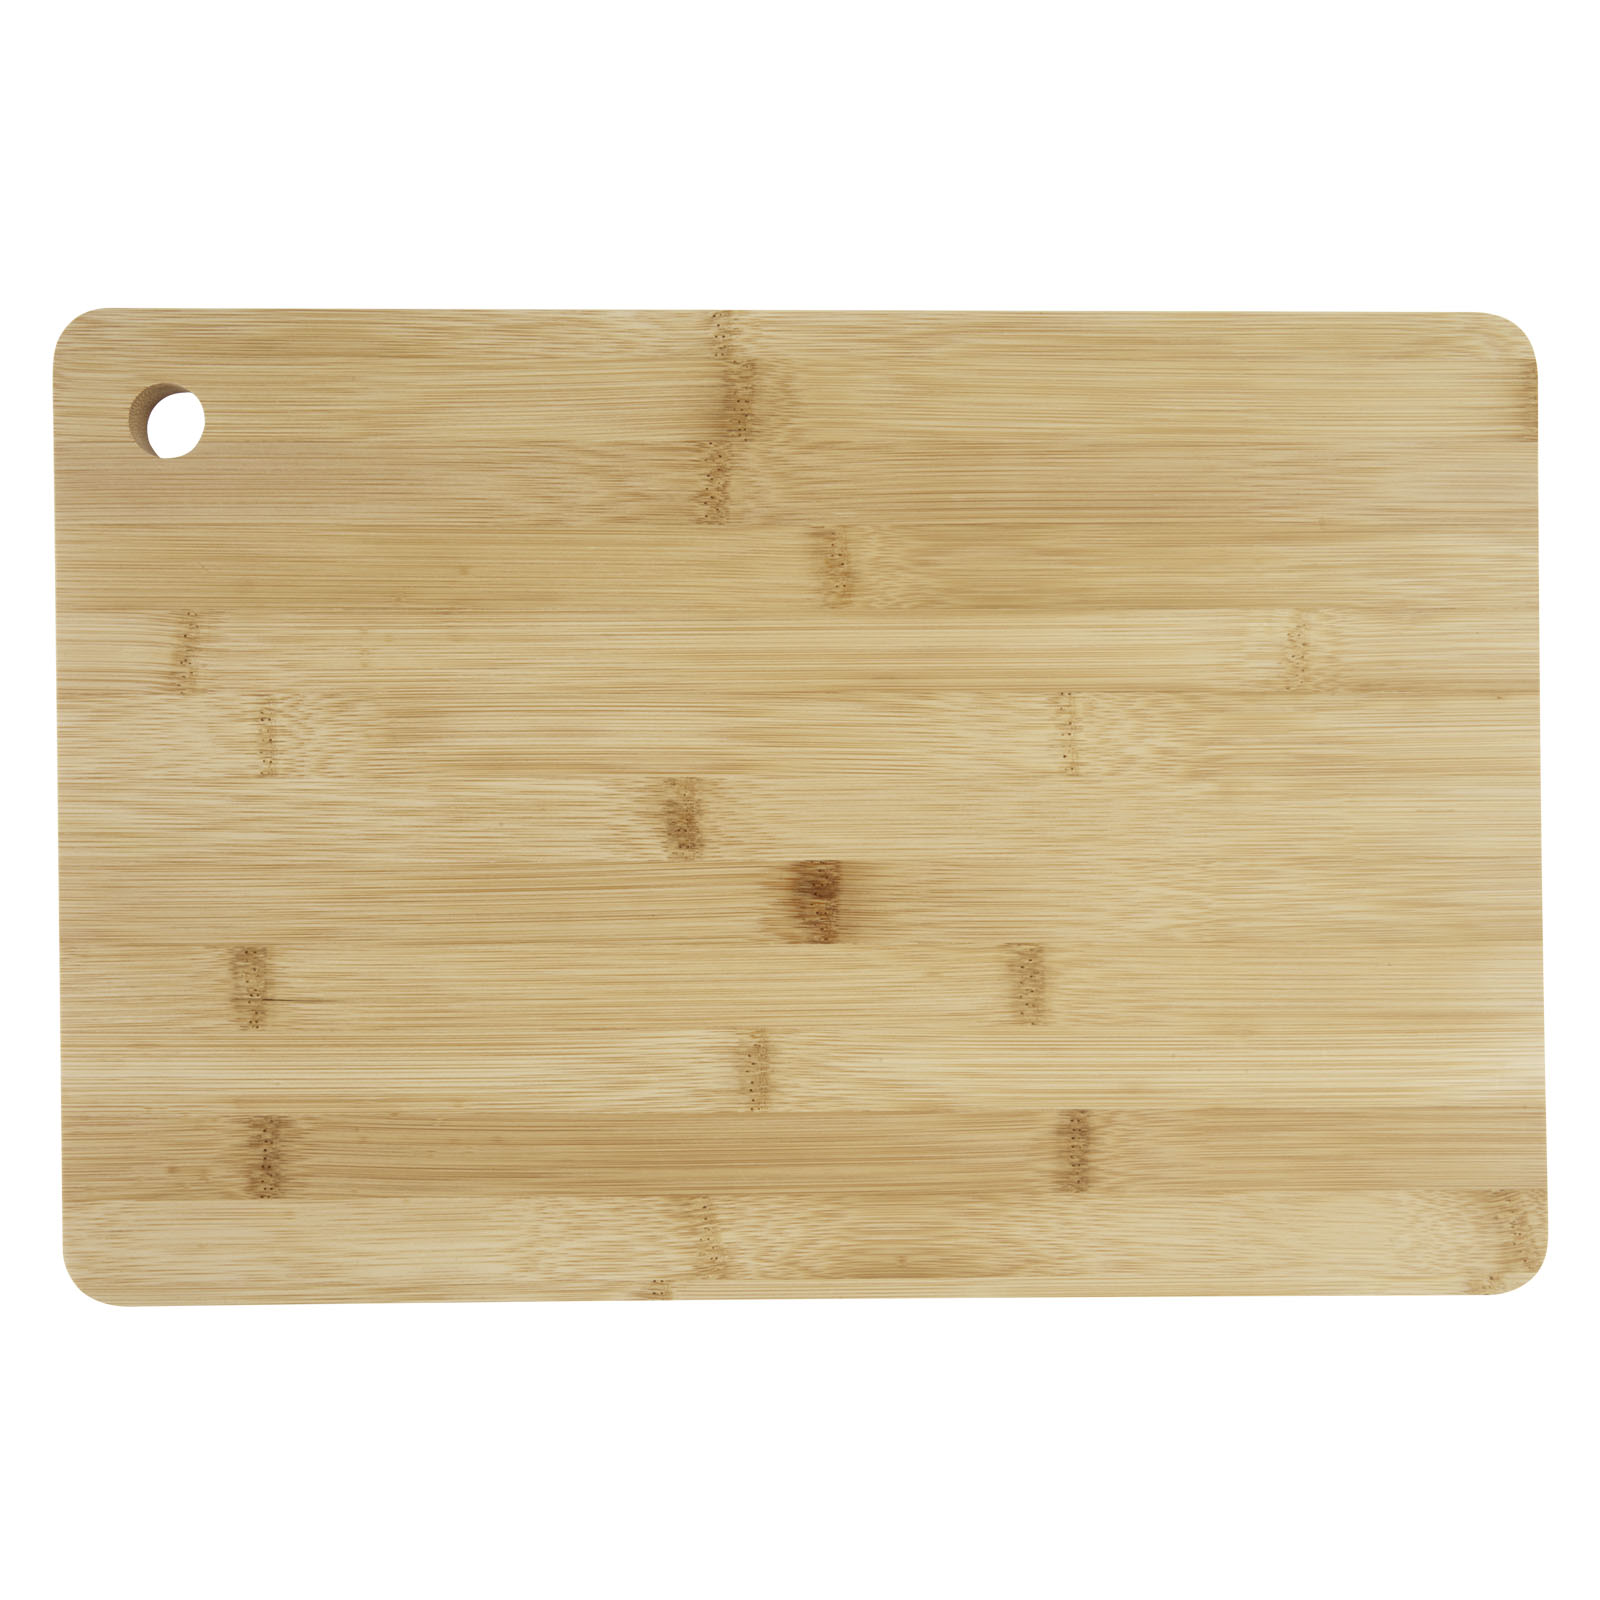 Advertising Cutting Boards - Harp bamboo cutting board - 3